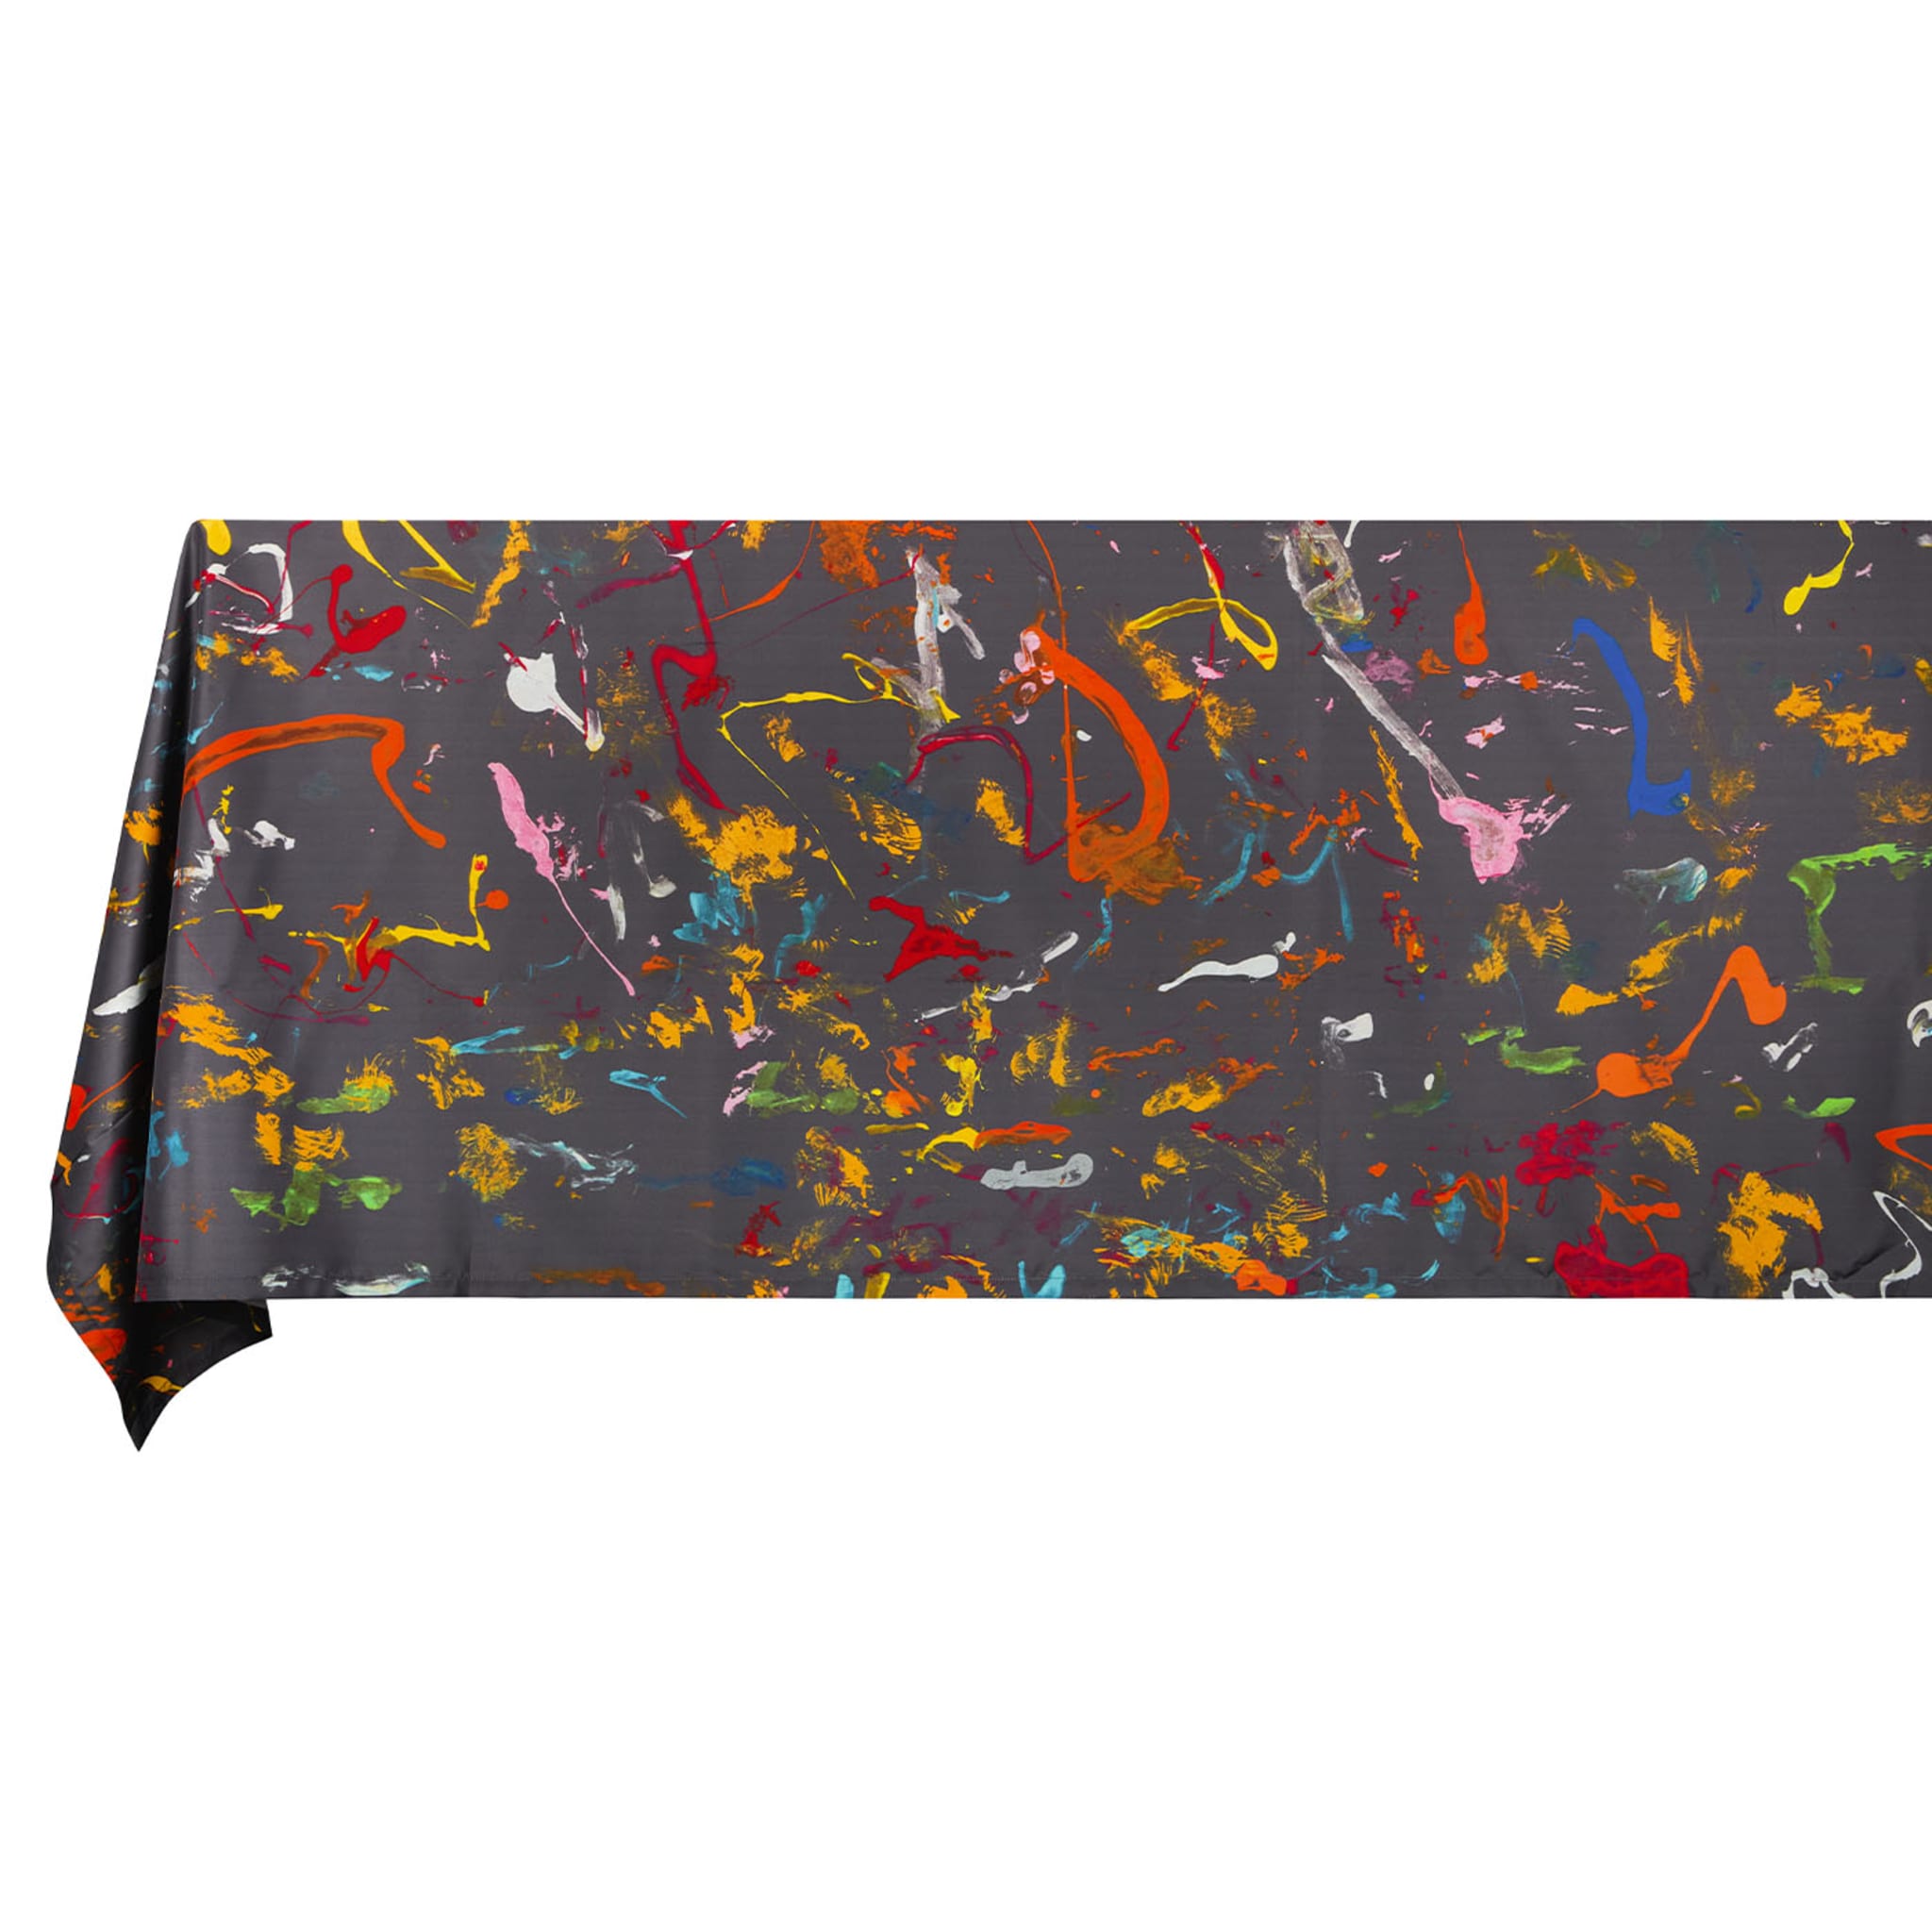 Carnival print taffeta tablecloth - Alternative view 1